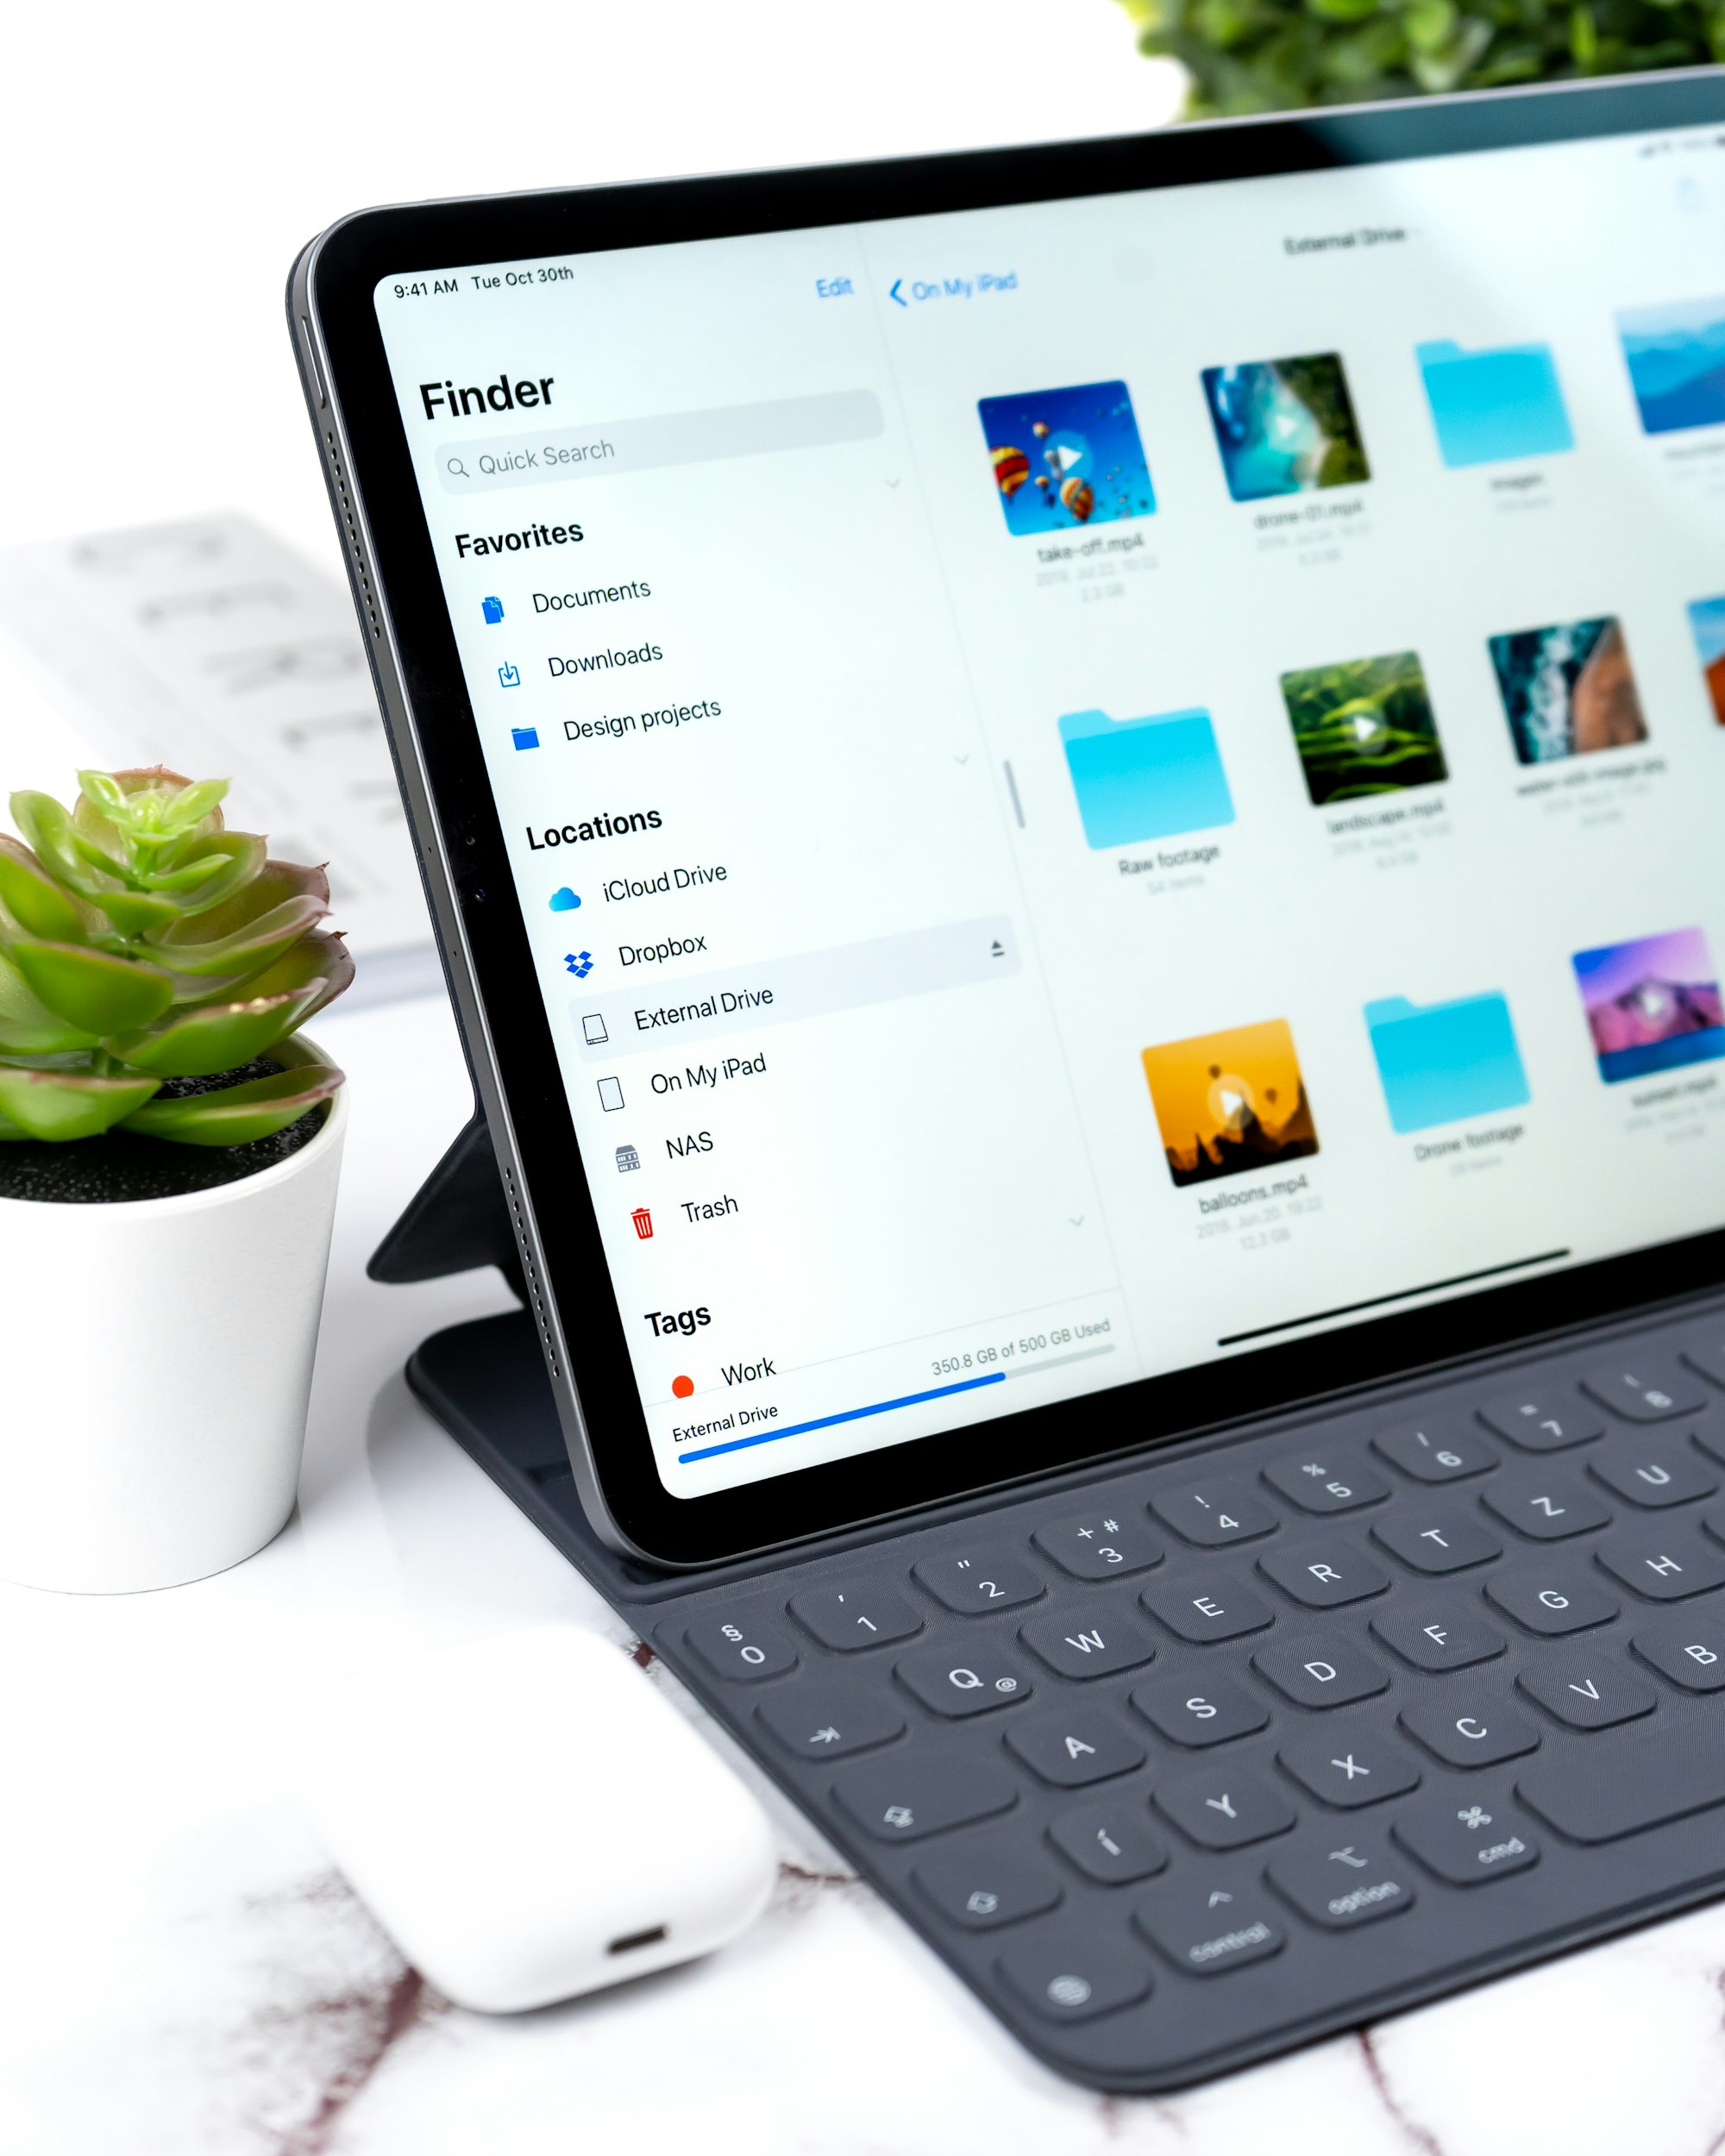 iPad 2 Keyboard Shootout: Finding the best keyboard